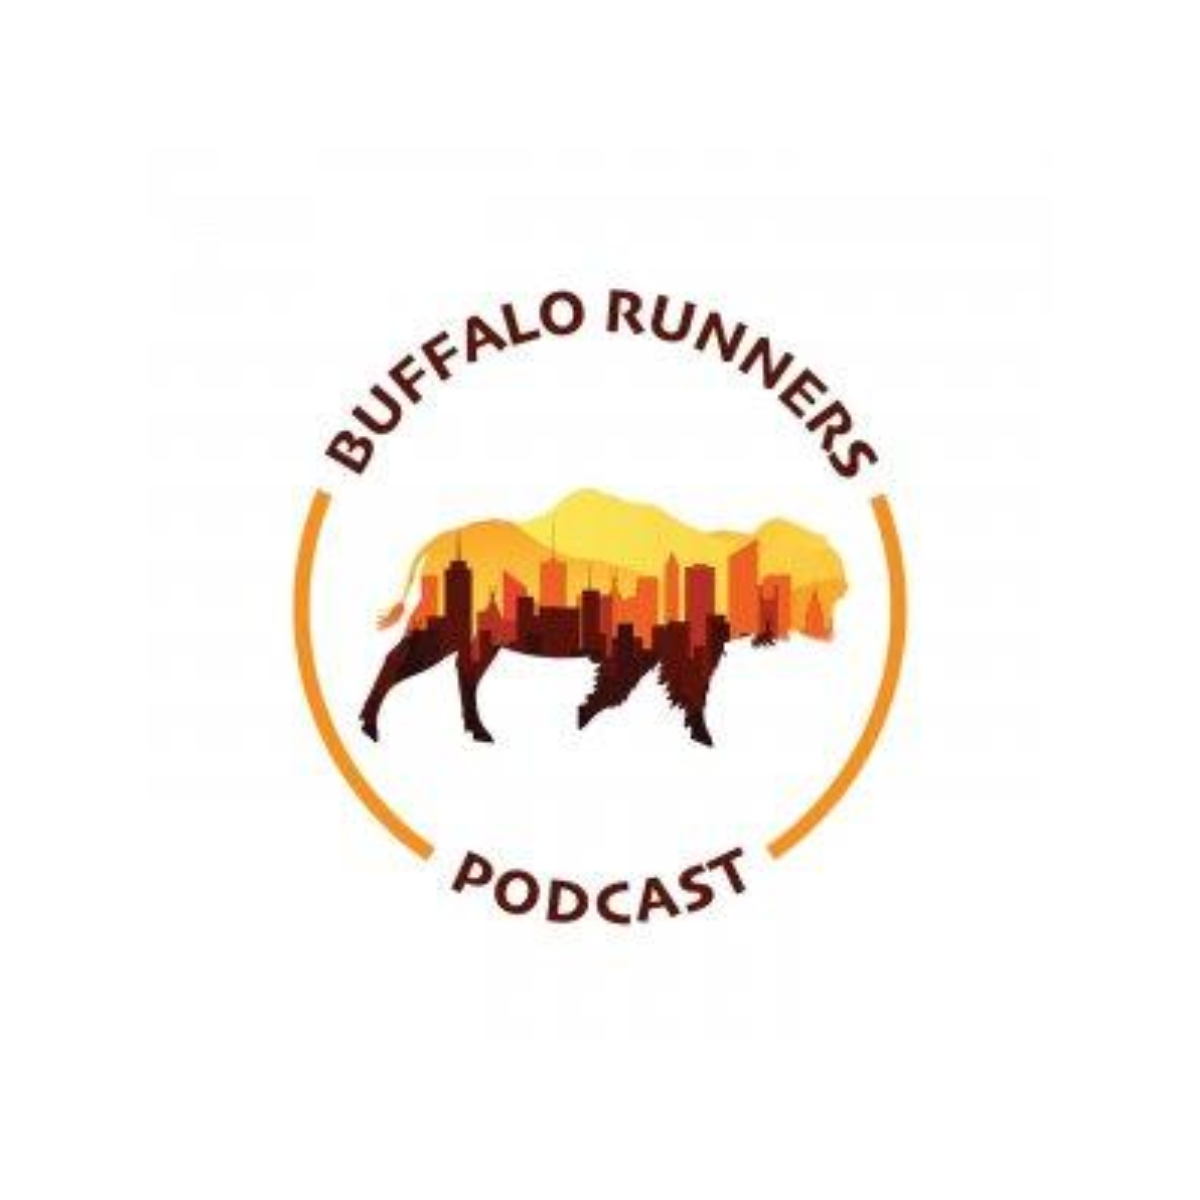 Community Program Buffalo Runners Podcast